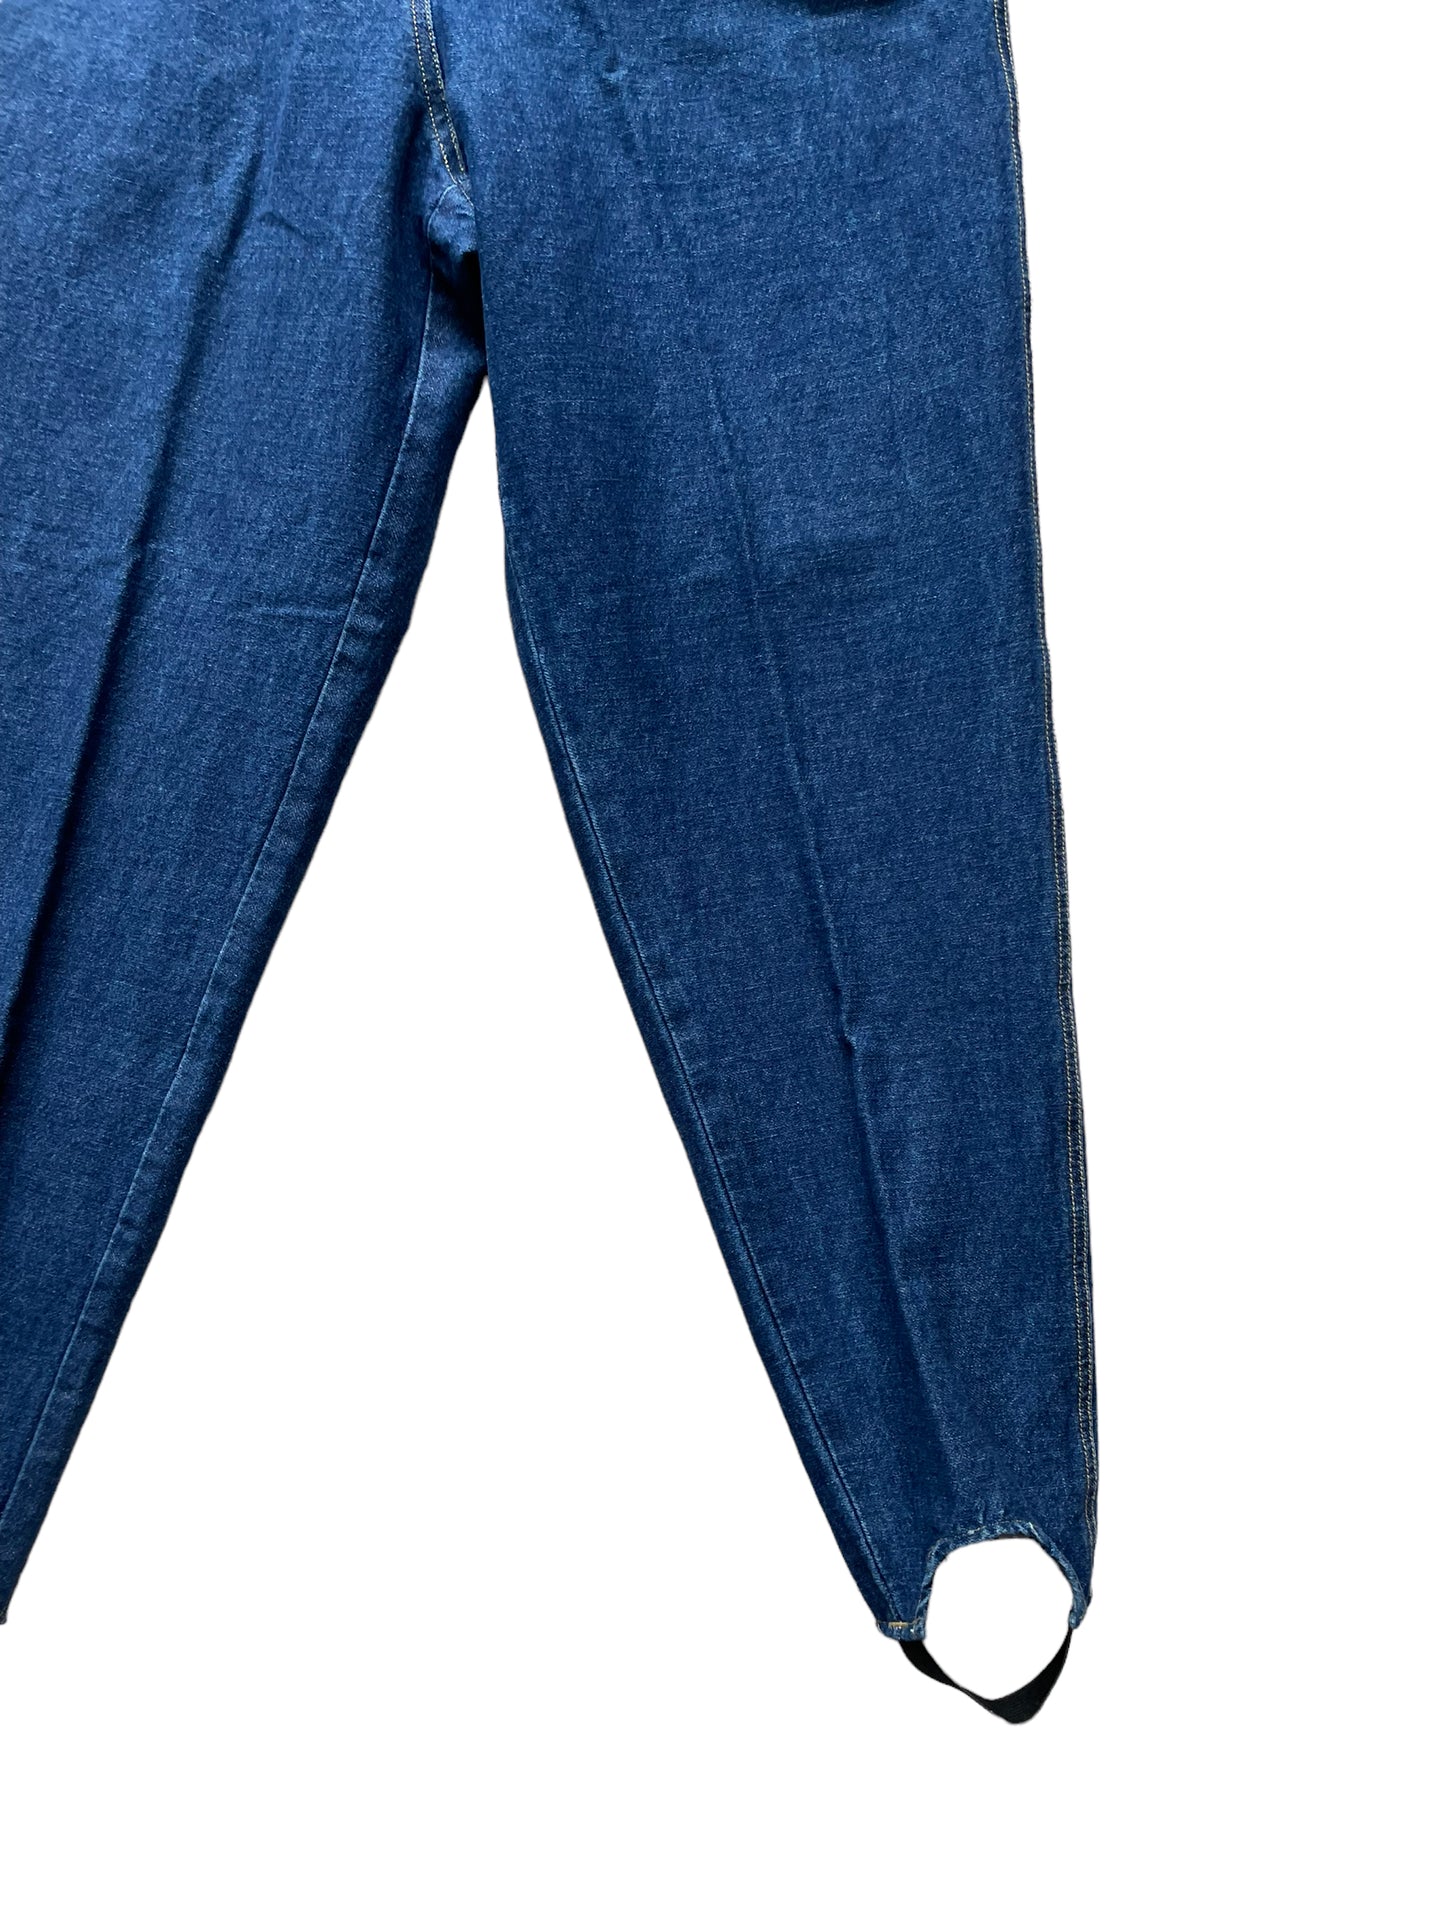 Left front leg view of Vintage Deadstock 80's Liz Claiborne Side Zip Stir Up Jeans